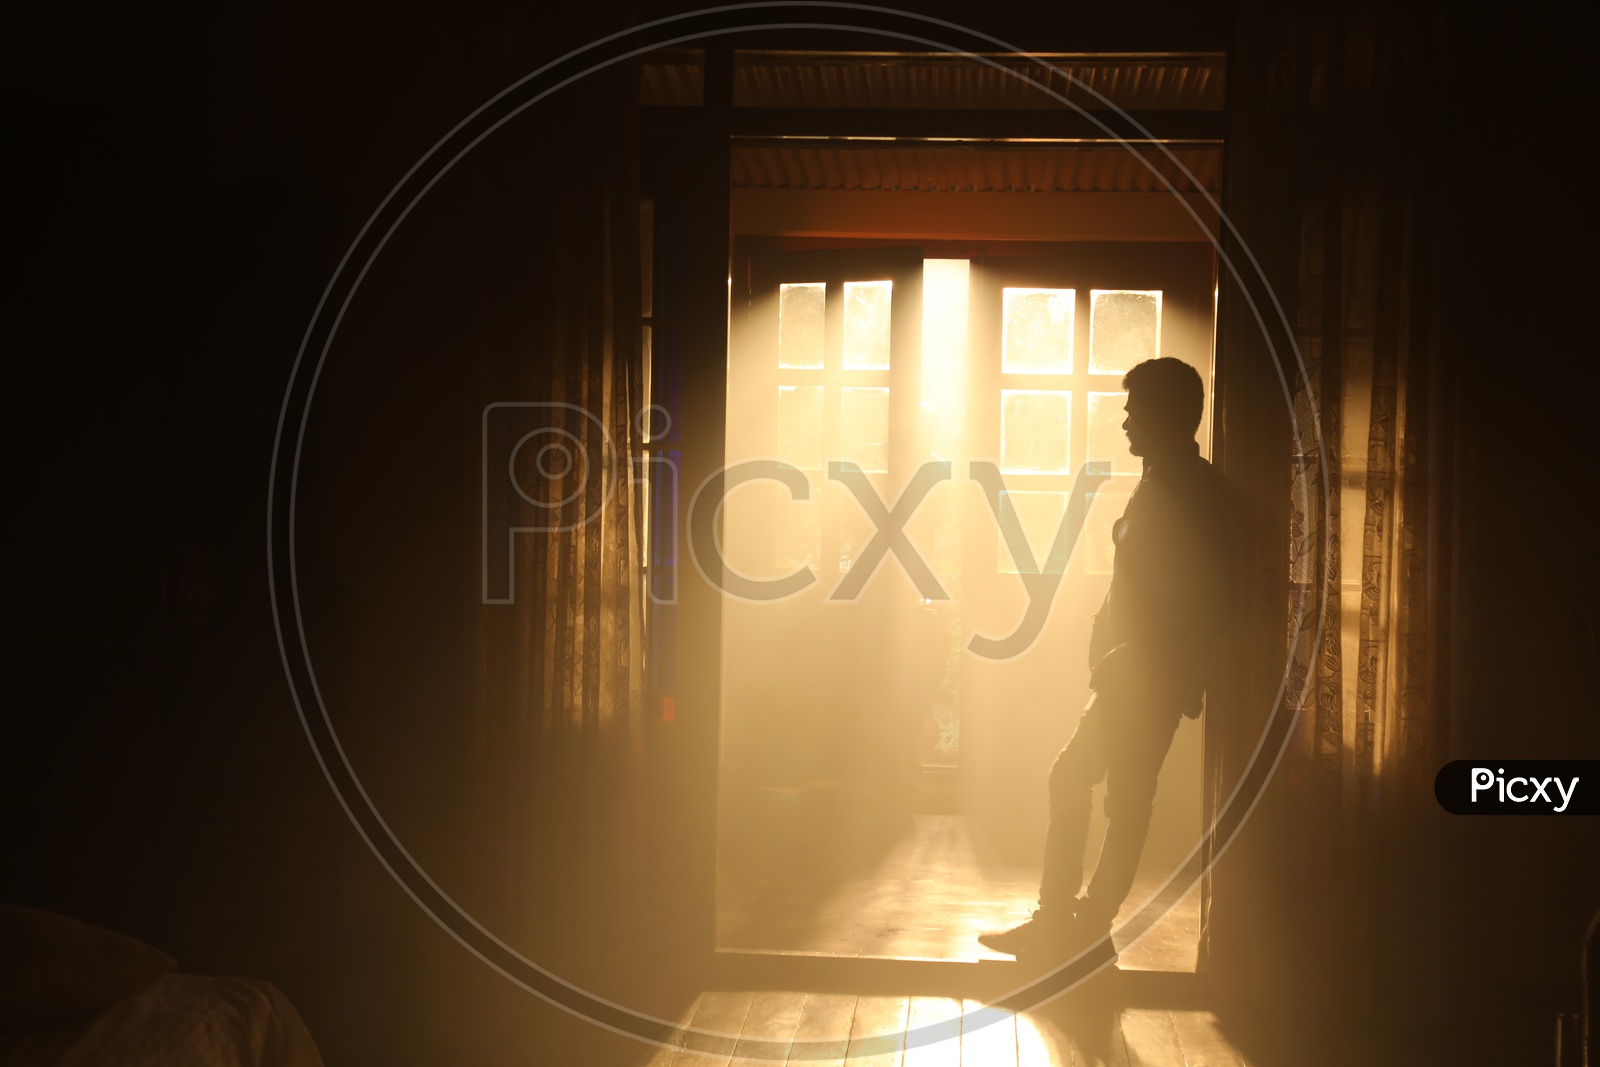 Silhouette Of a Man Over a Light Through a House Door